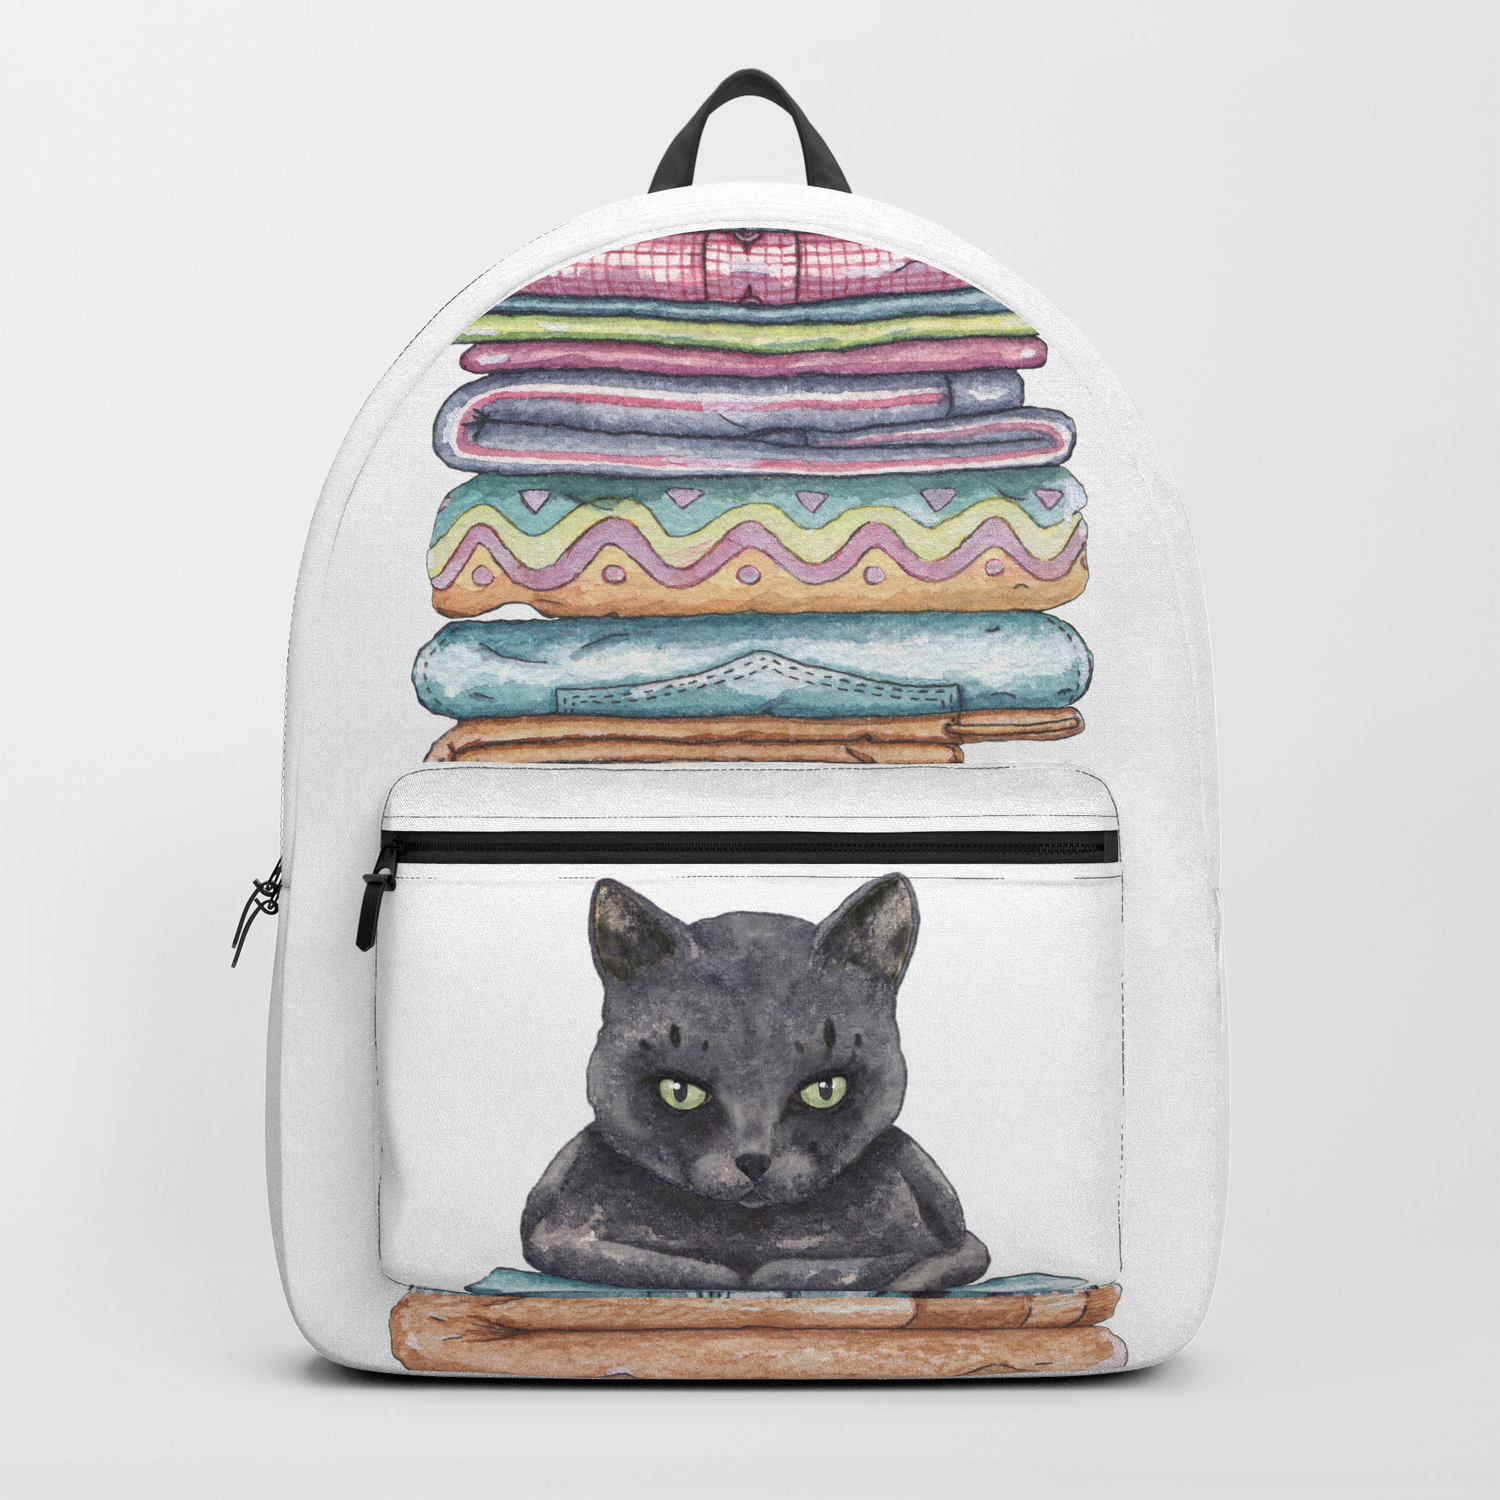 u cat backpack